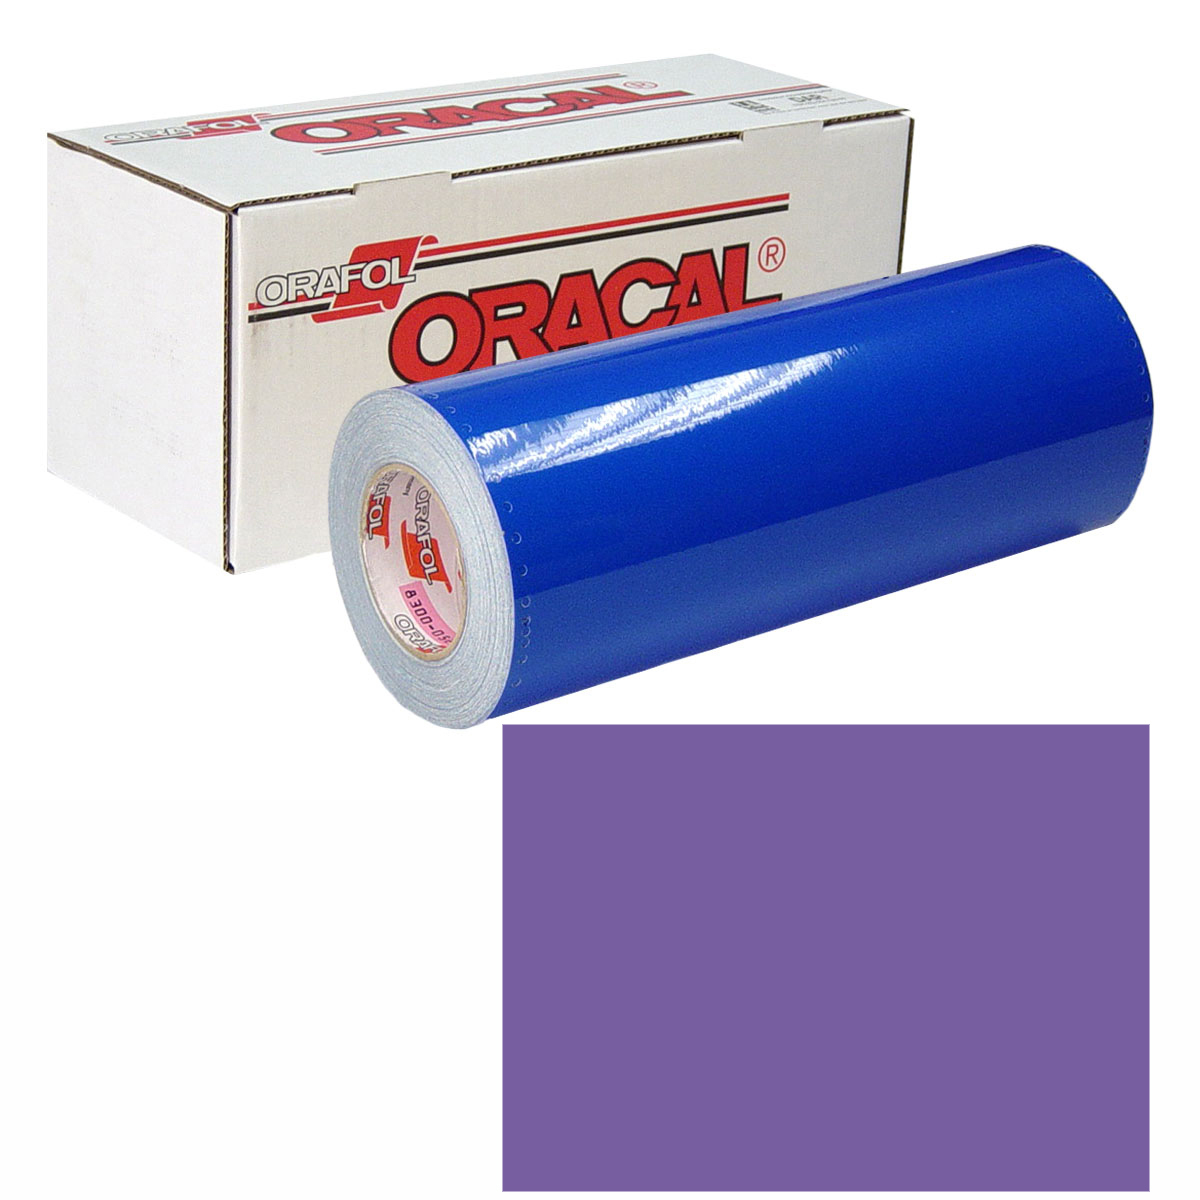 ORACAL 631 30in X 50yd 043 Lavender